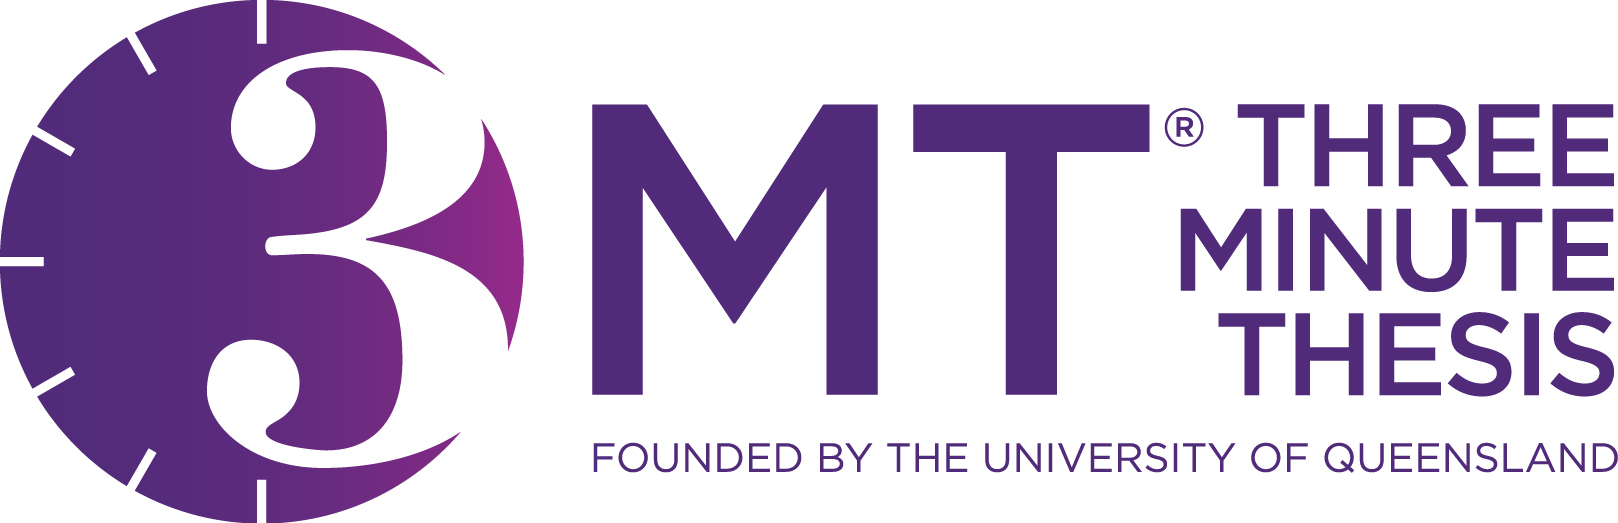 3MT Logo